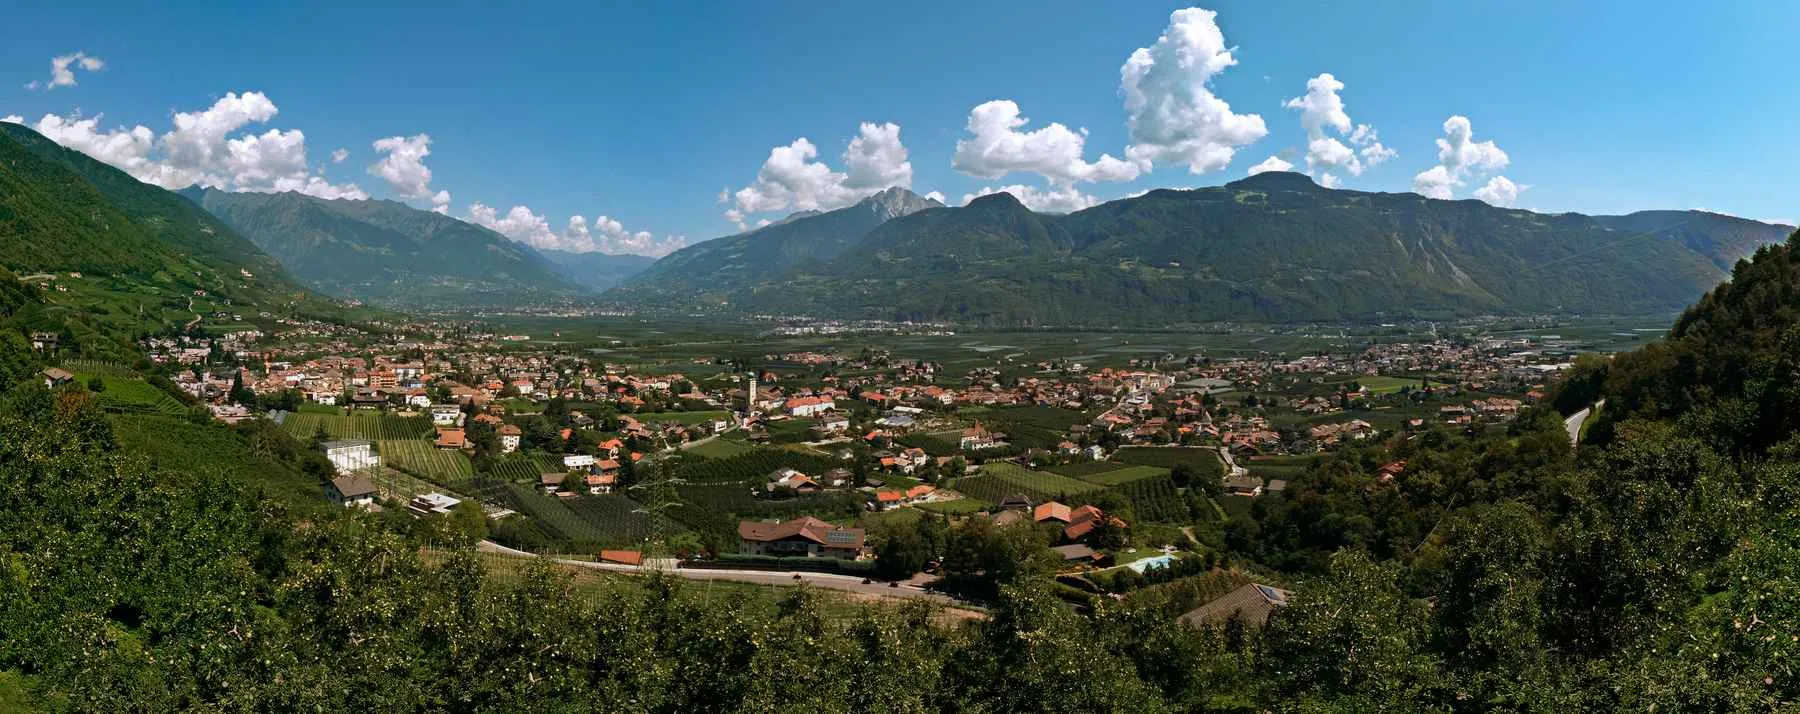 Slika Provincia Autonoma di Bolzano/Bozen